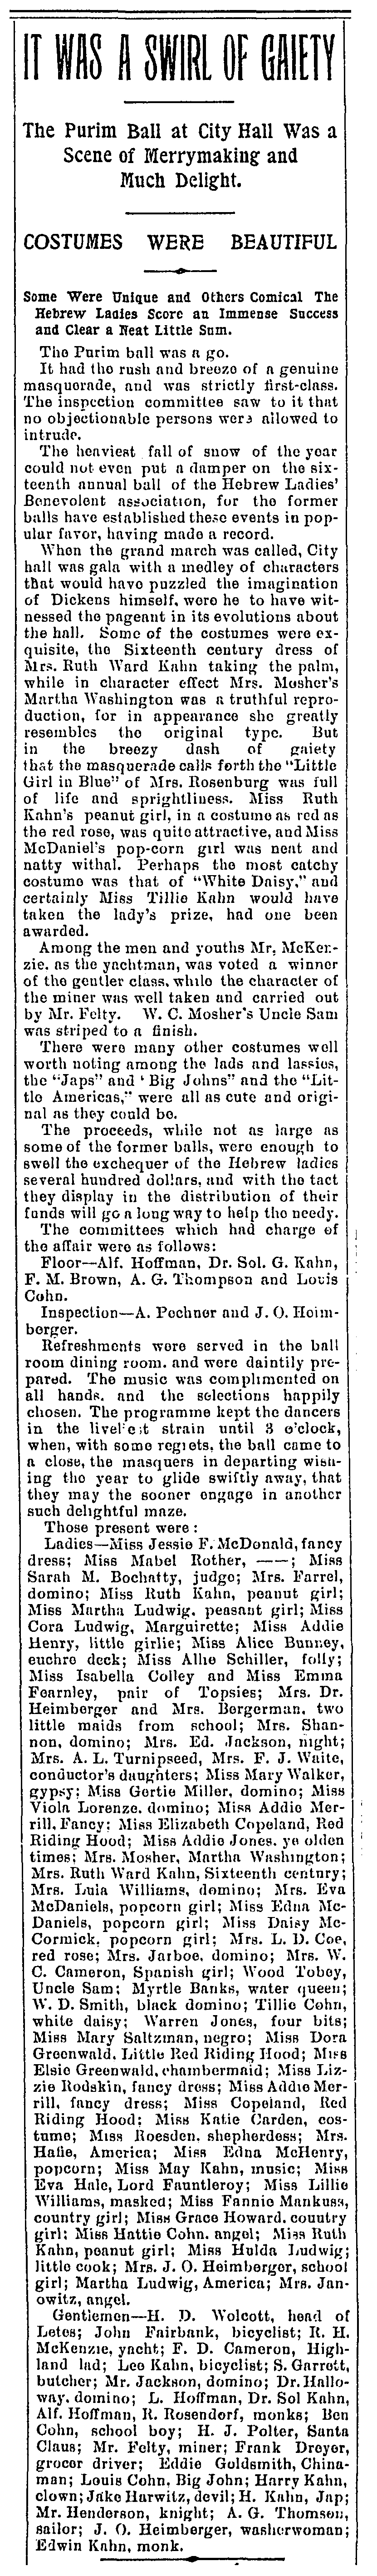 The Herald Democrat. Thursday, March 14, 1895.